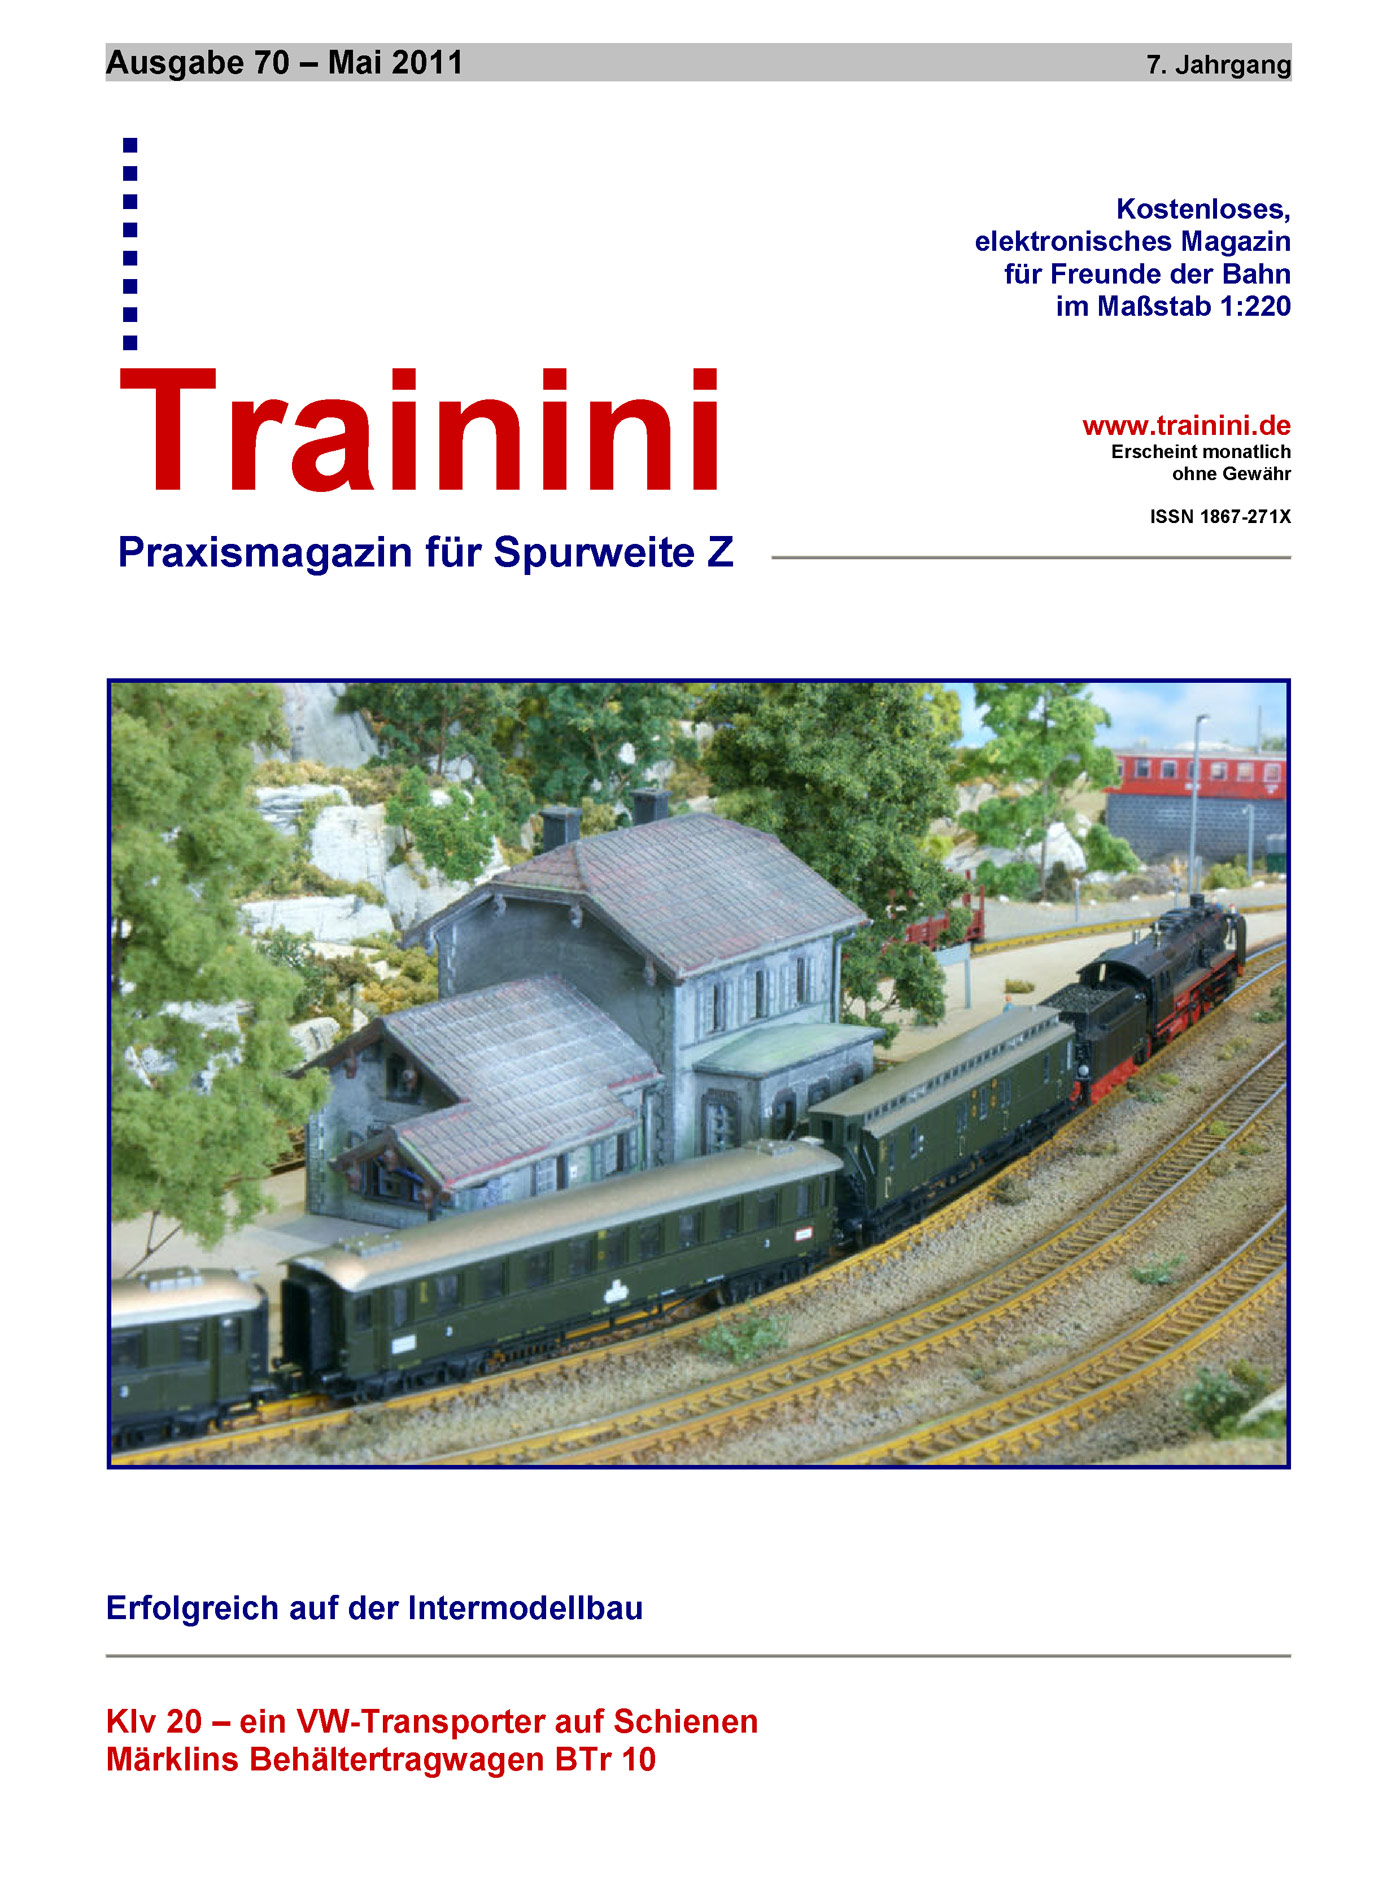 Trainini Ausgabe Mai 2011